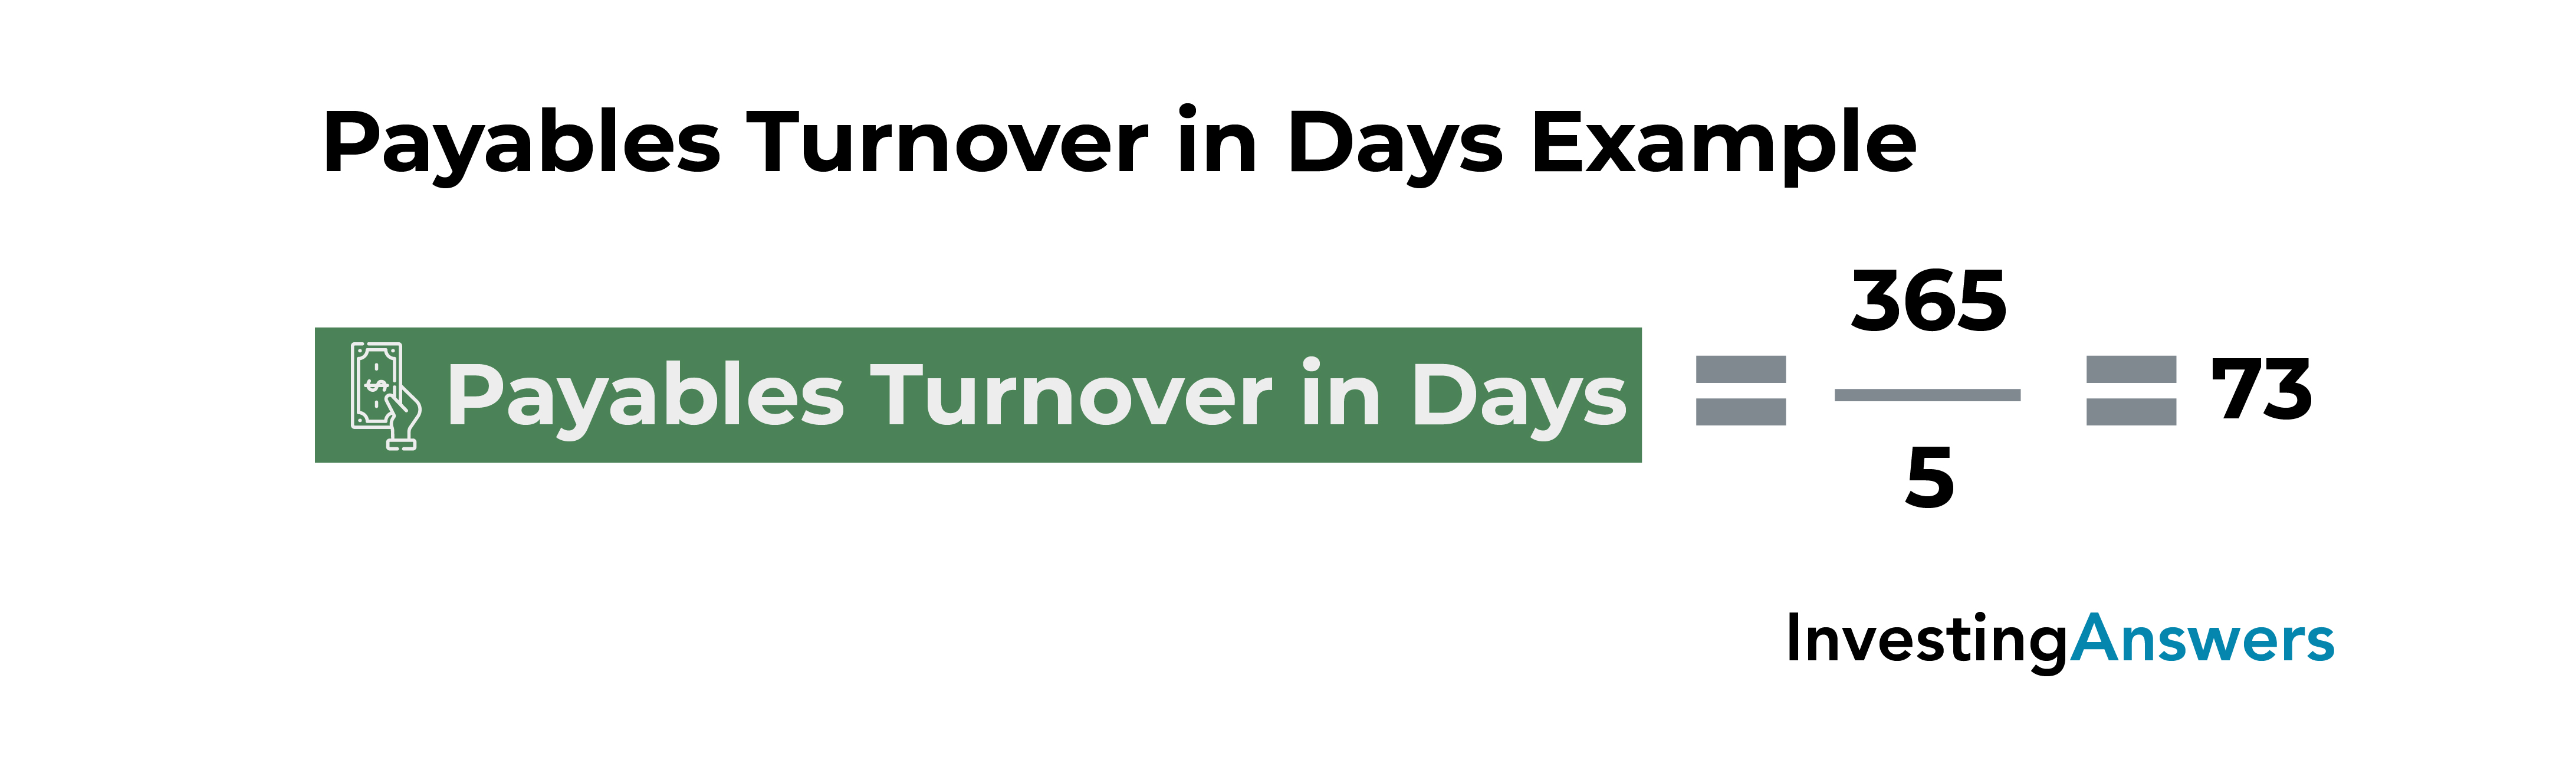 ap turnover days